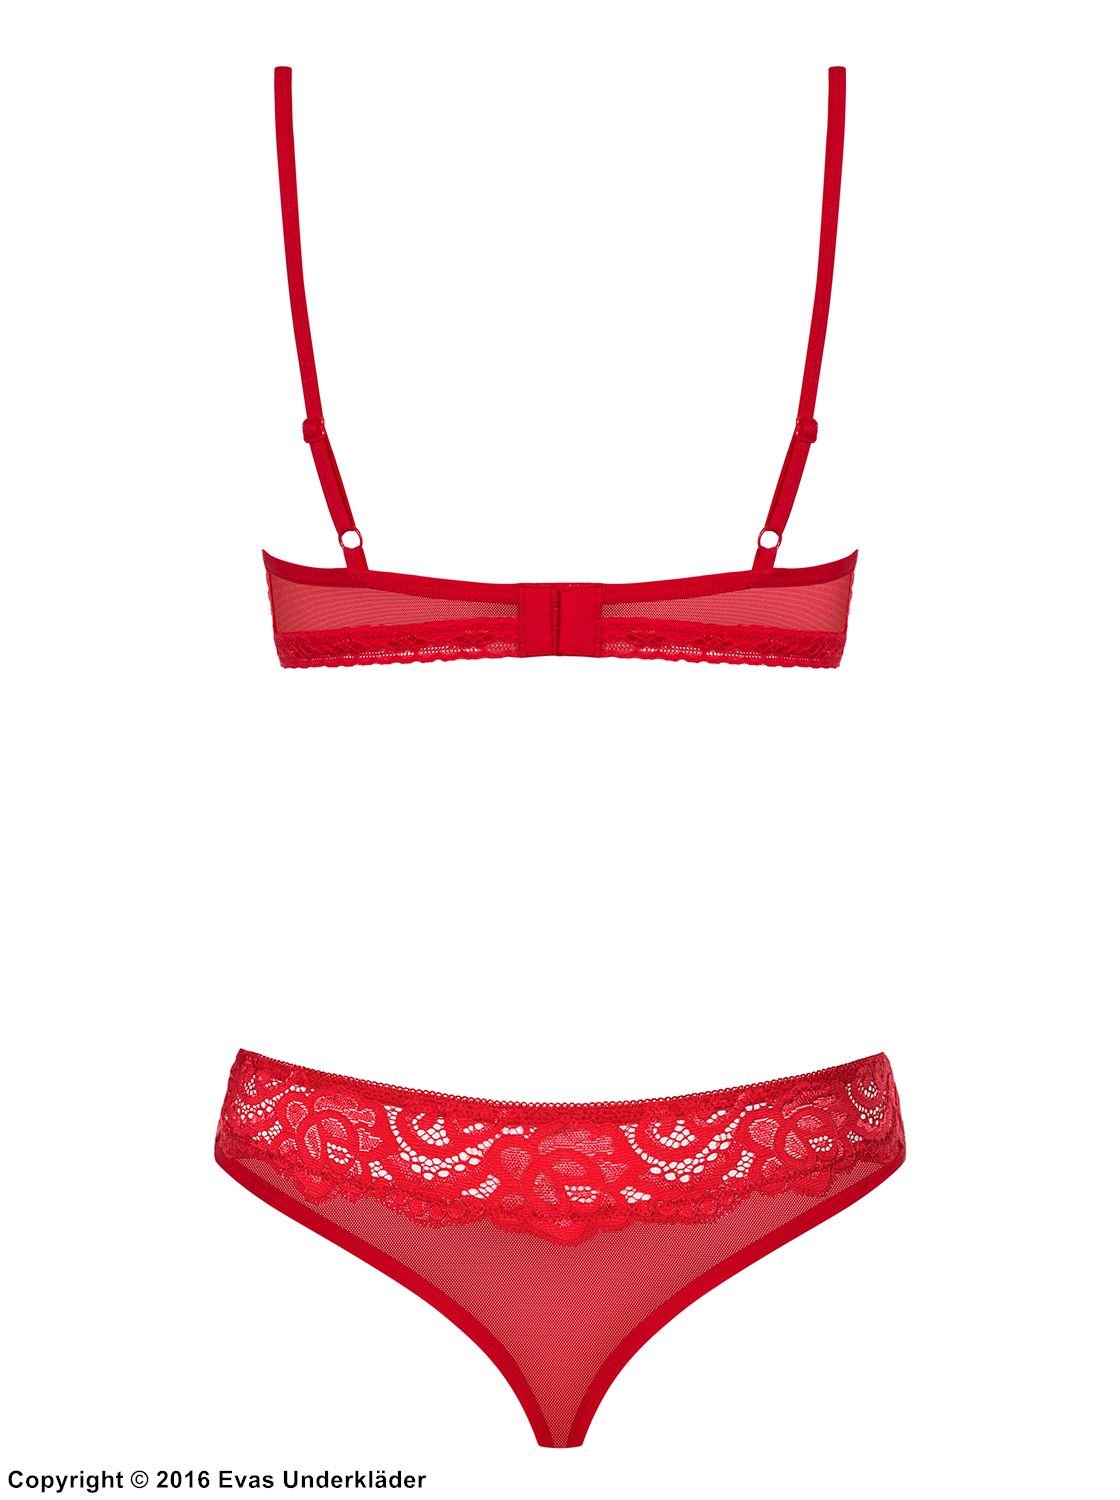 Seductive lingerie set, straps over bust, lace cups, rhinestone heart